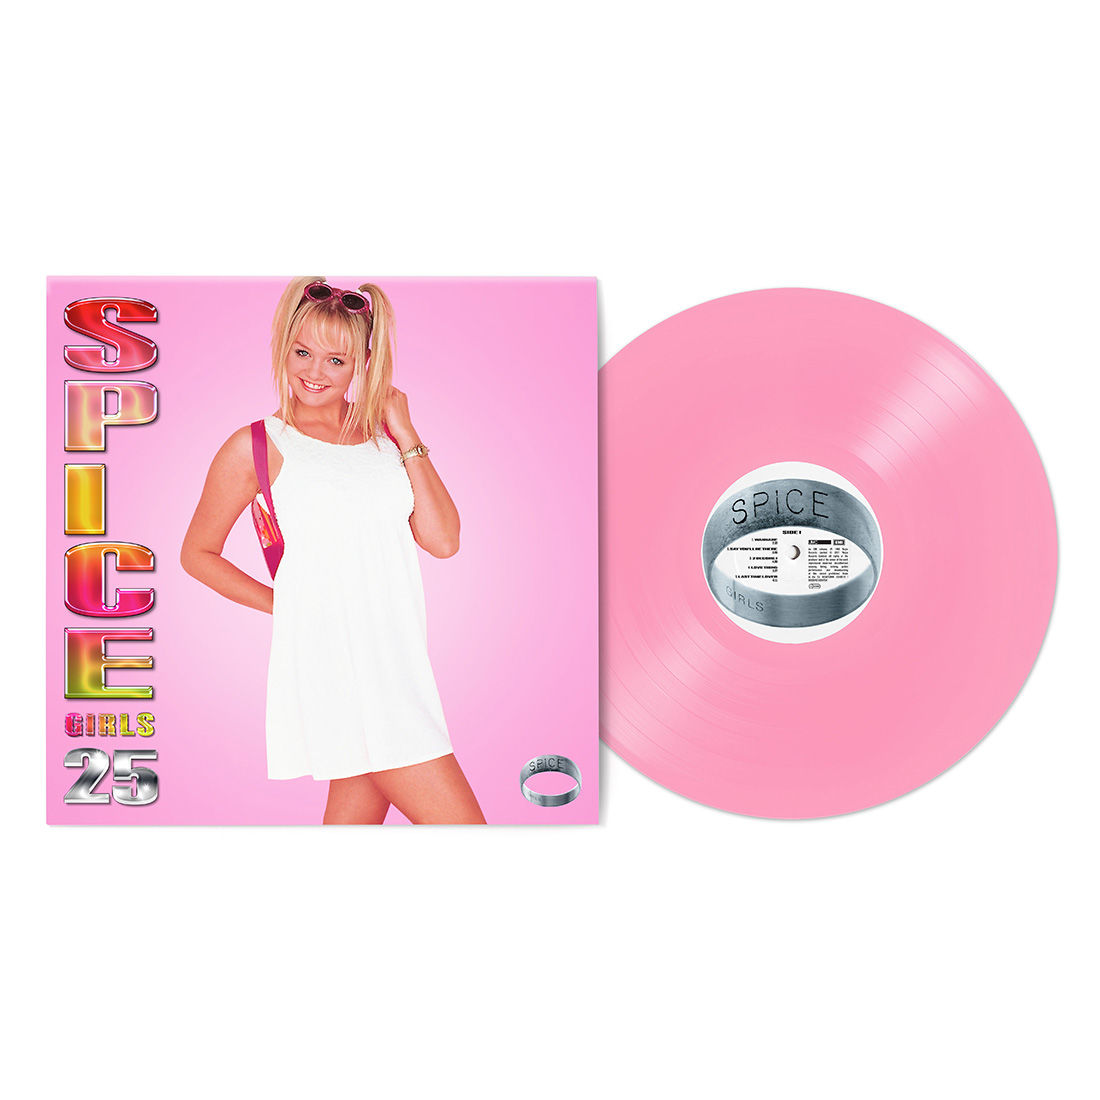 Spice Girls - Spice - 25th Anniversary (Baby Spice Pink Vinyl)